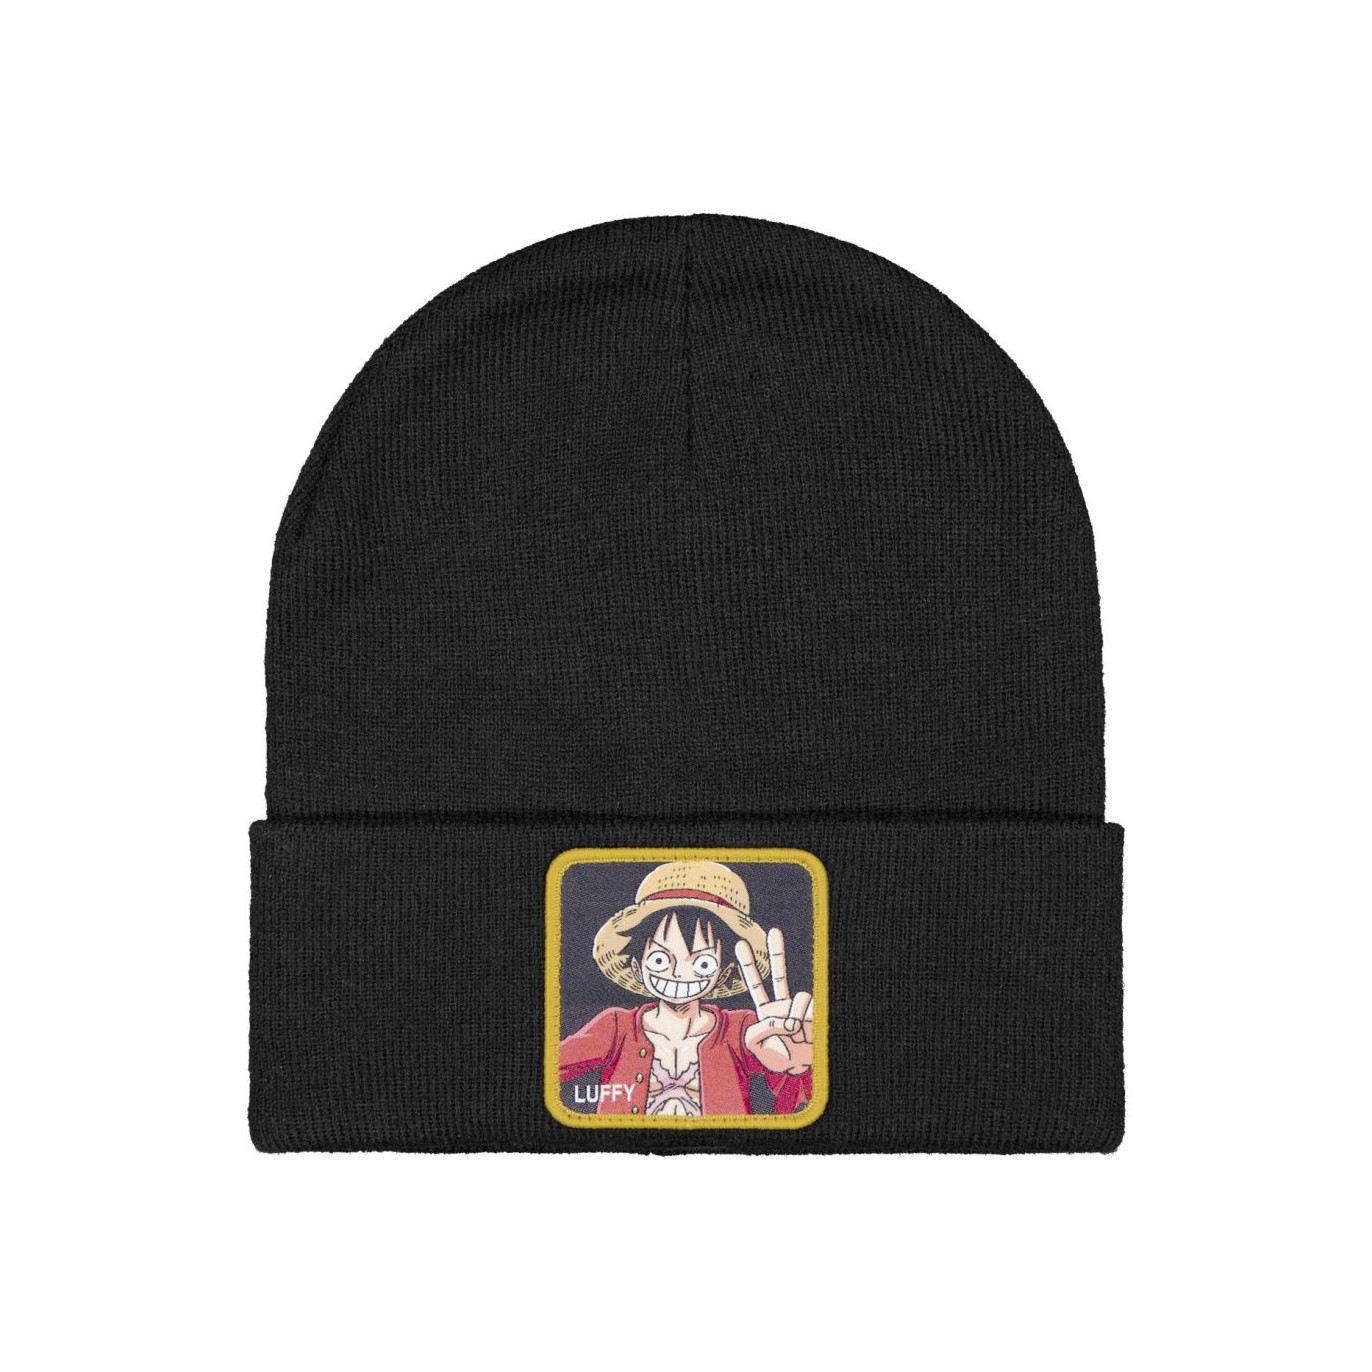 Bonnet One Piece Luffy - Noir - Capslab Capslab - 1